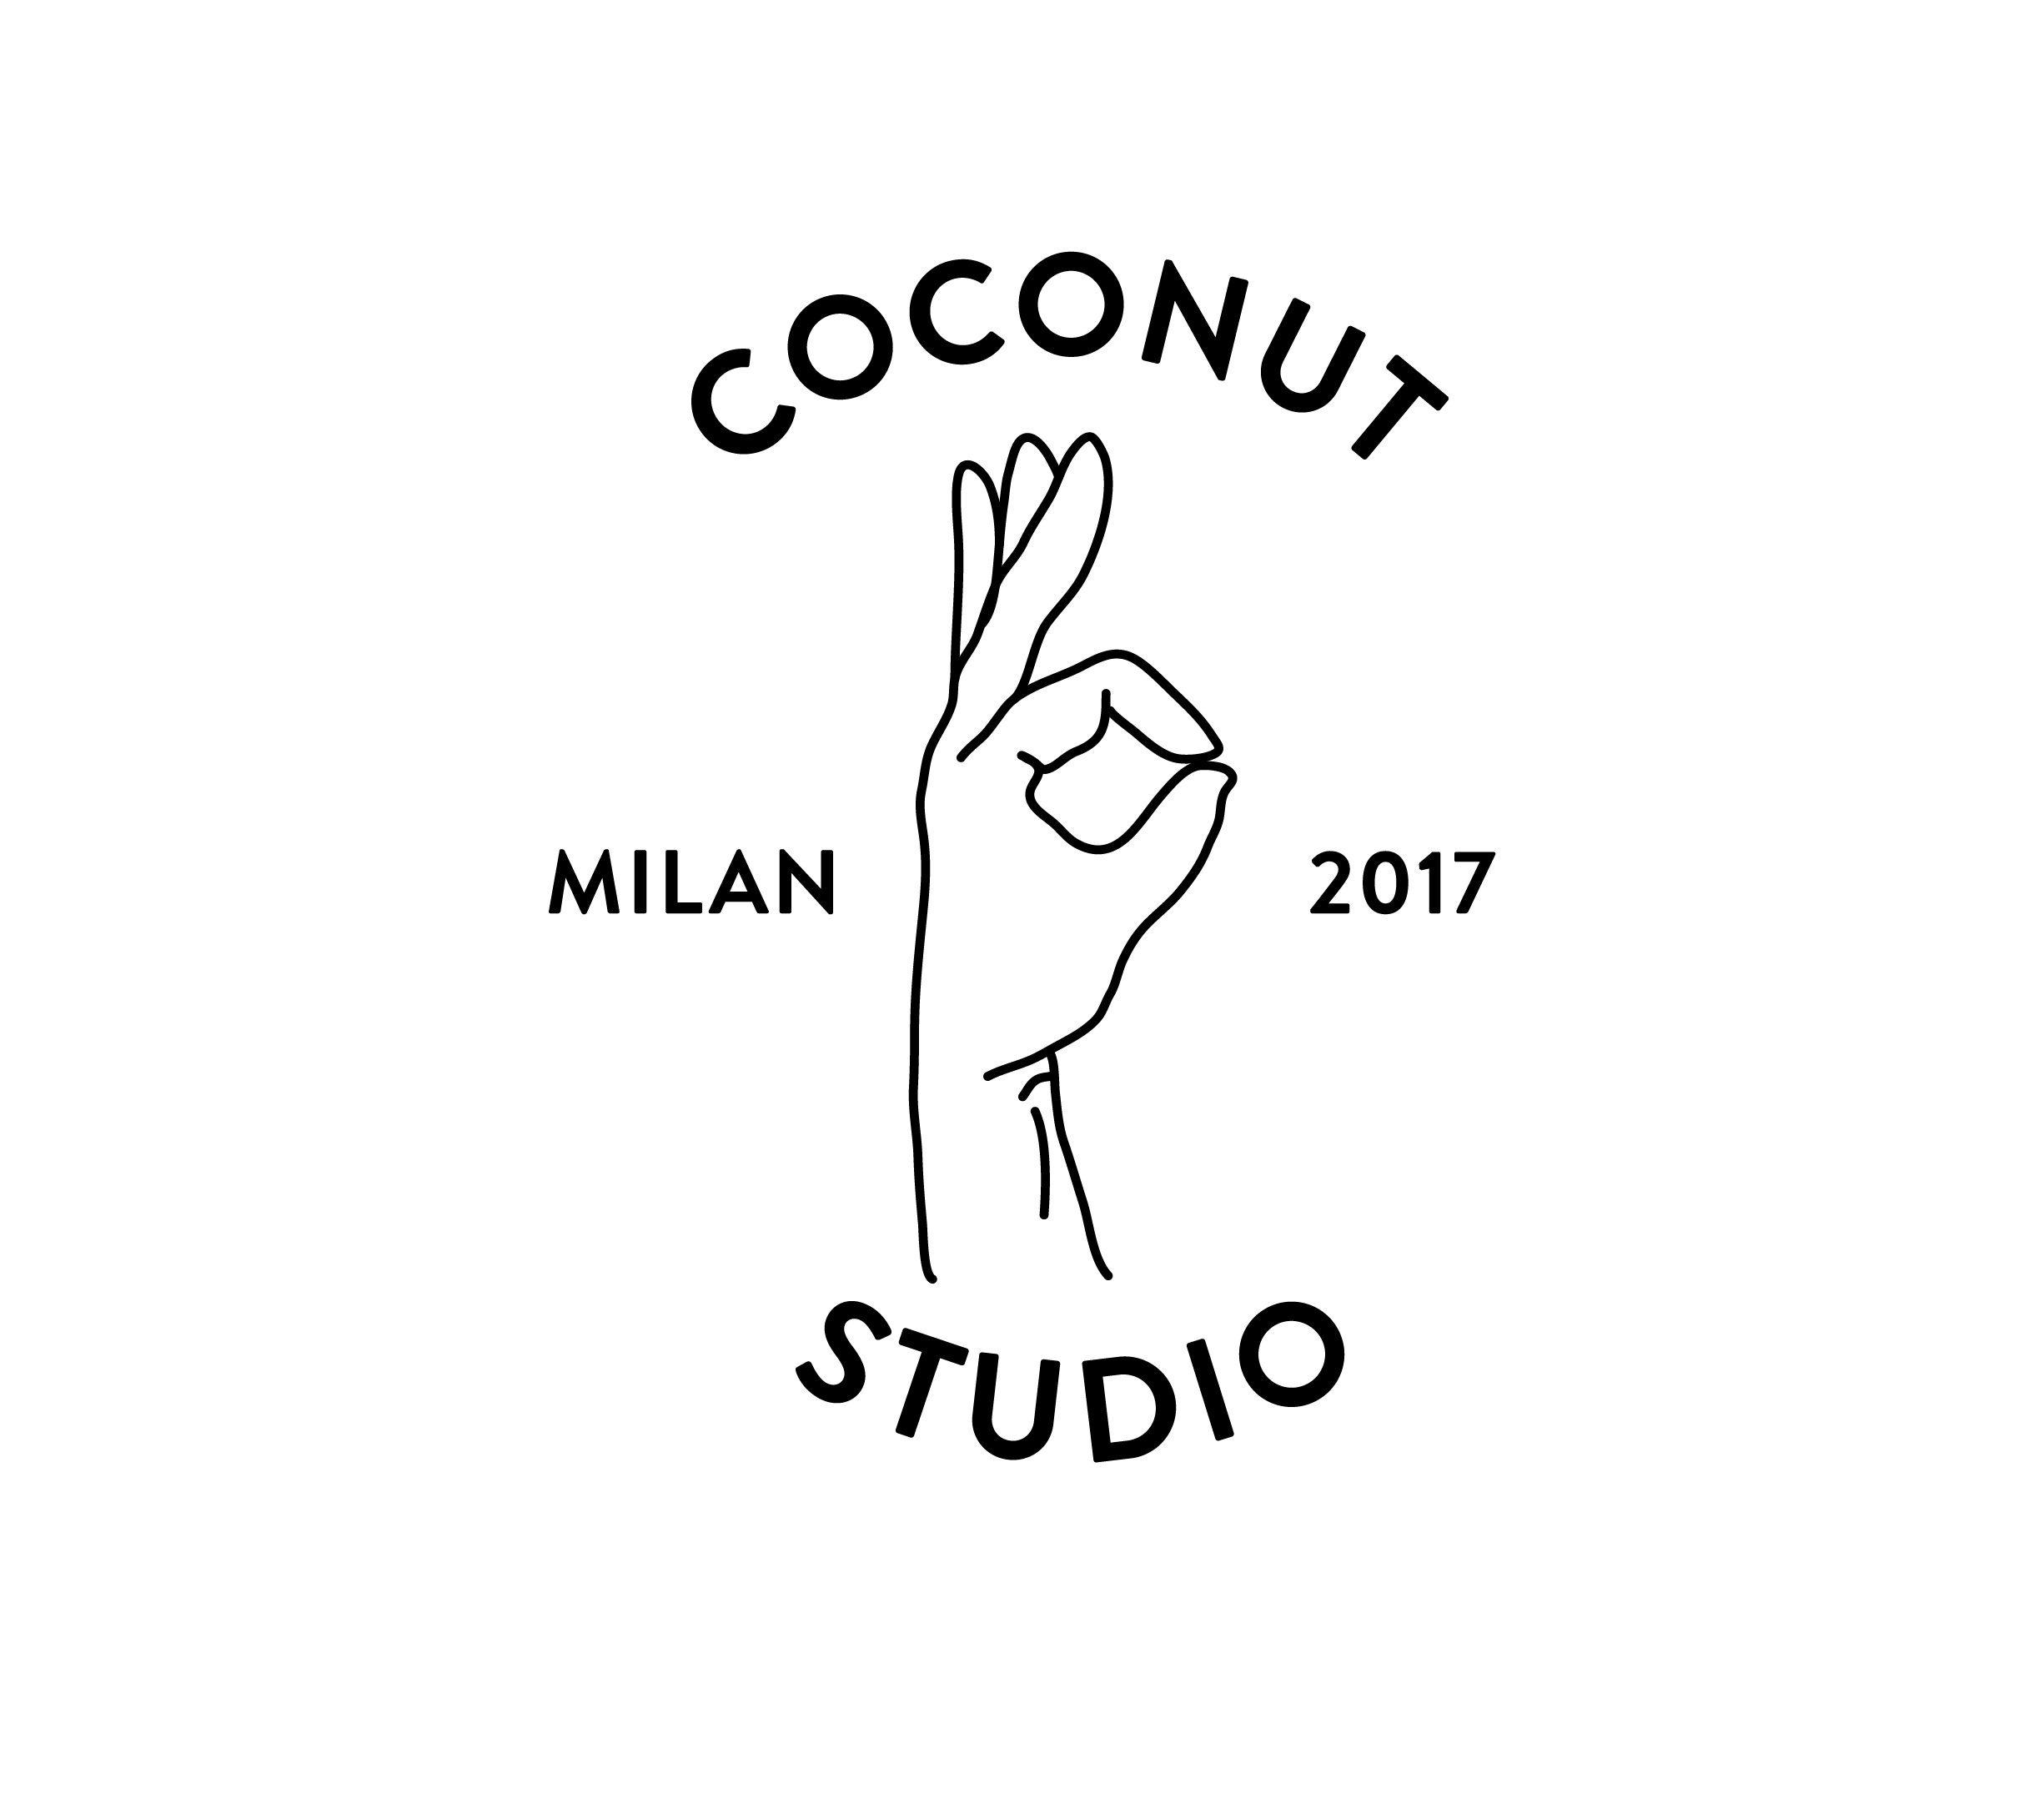 Coconut Studio